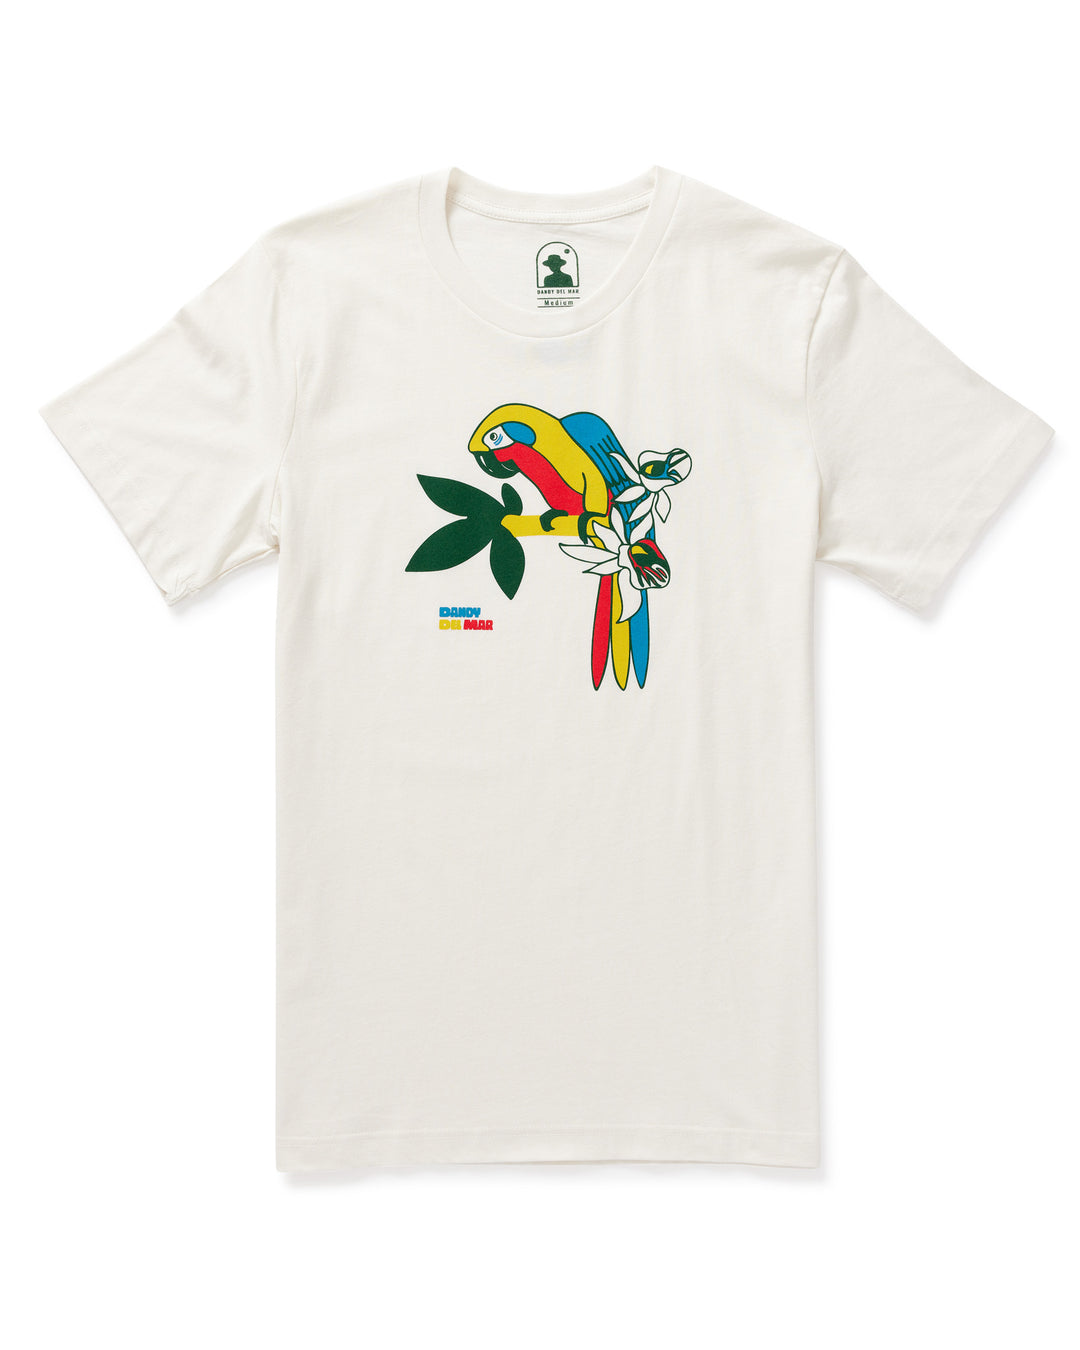 parrot printed white colour tshirt of dandy del mar